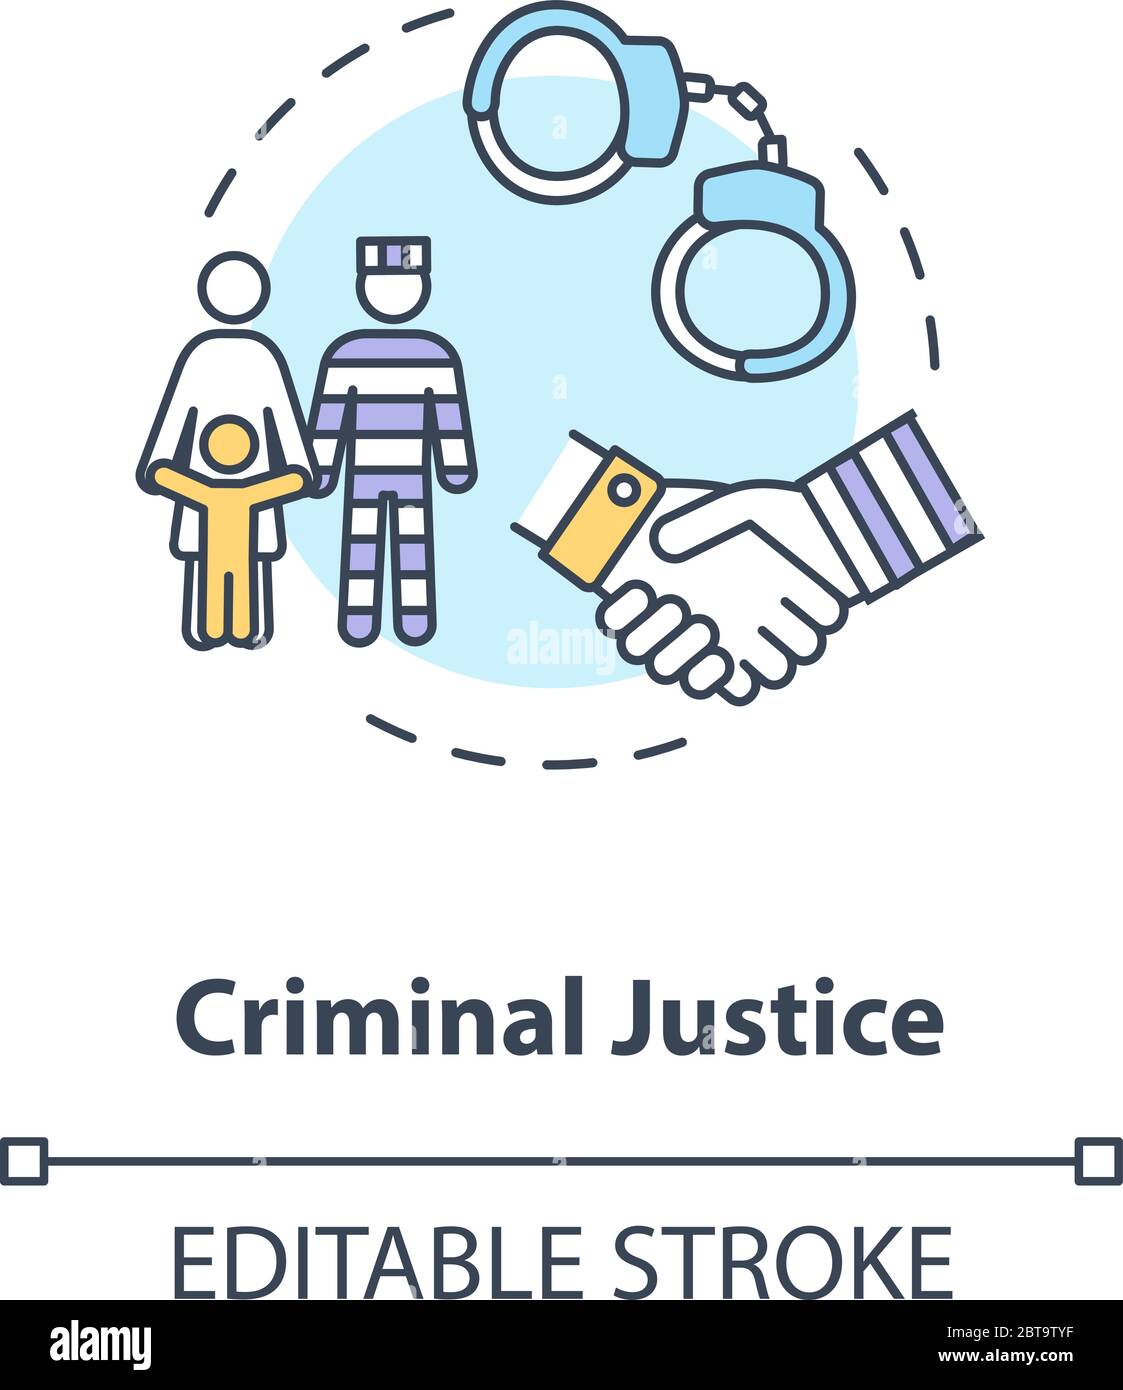 Criminal justice concept icon Stock Vector